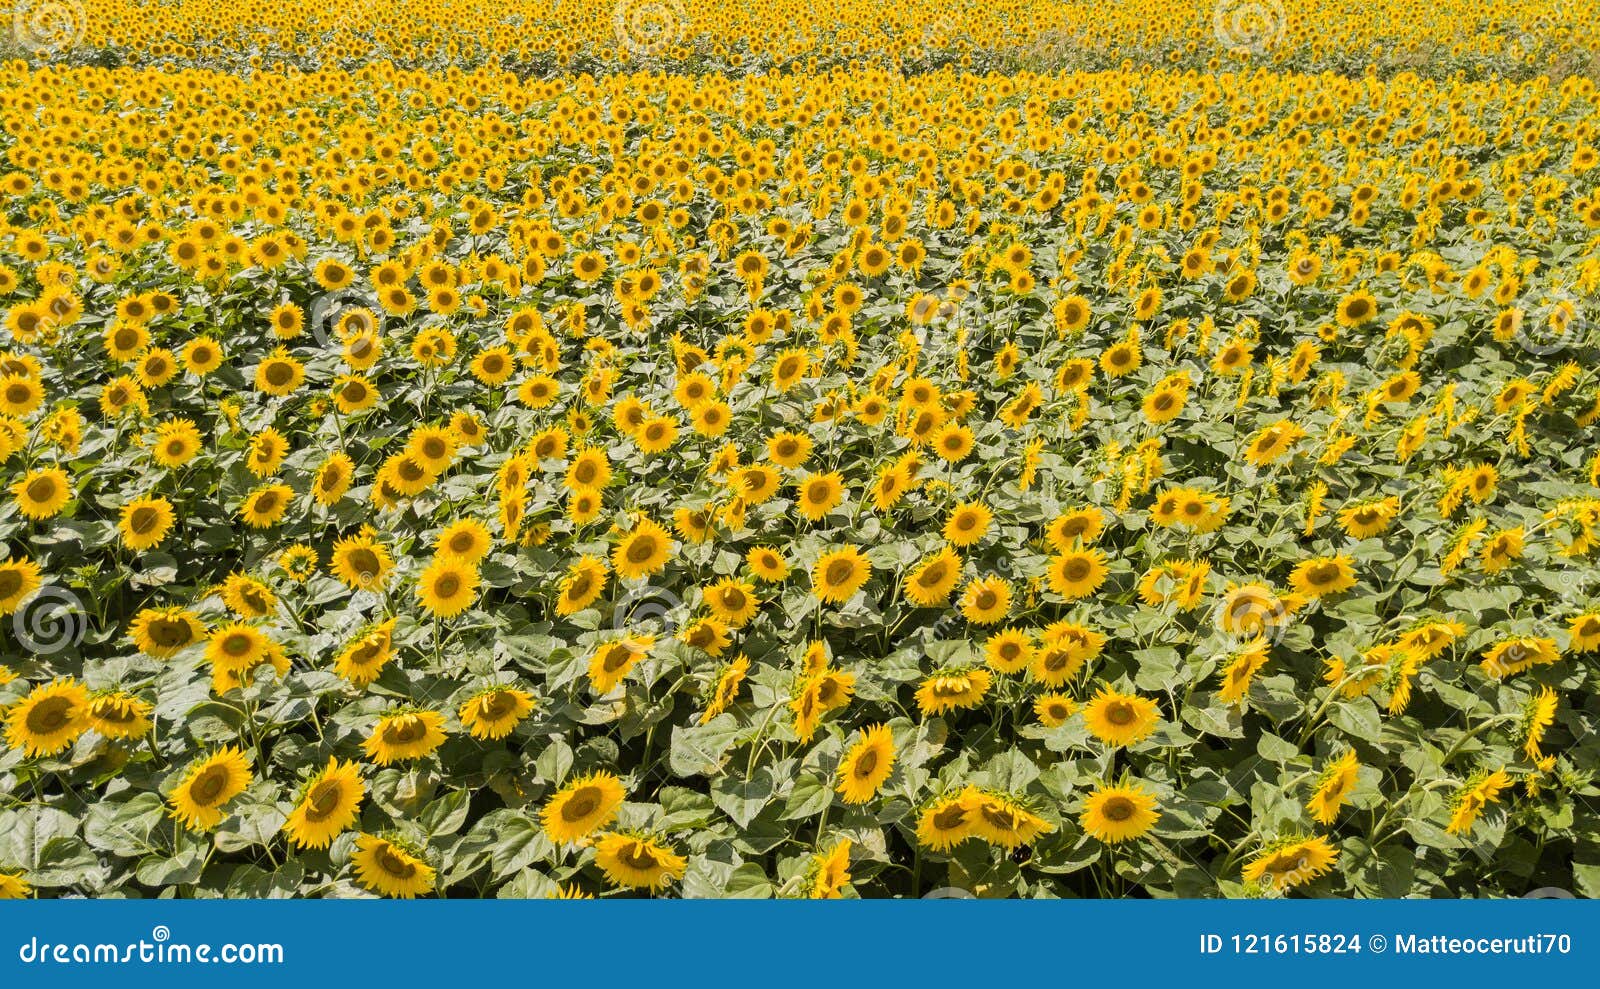 Yellow Sunflowers Wonderful Rural Landscape Of Sunflower Field In